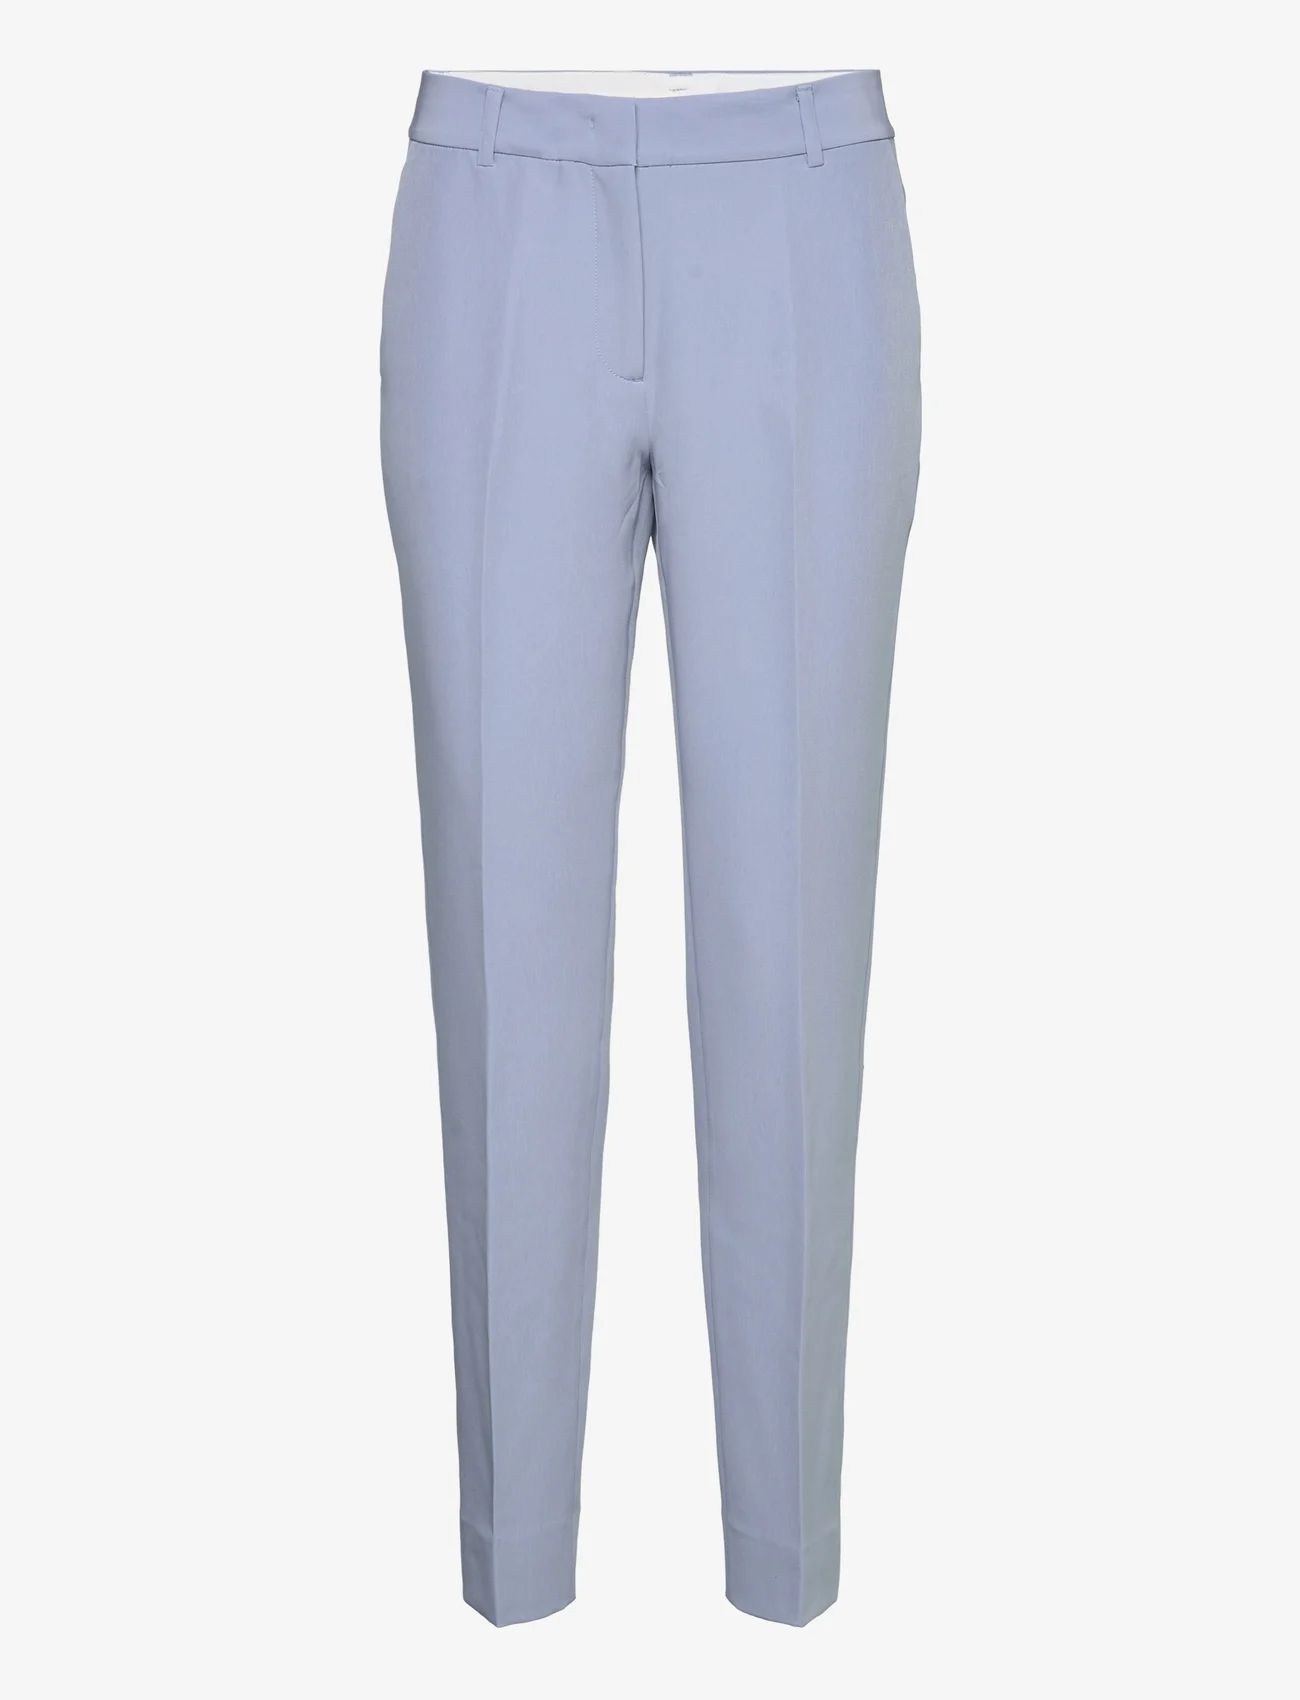 Bruuns Bazaar - RubysusBBLinea pants - dressbukser - ash blue - 0